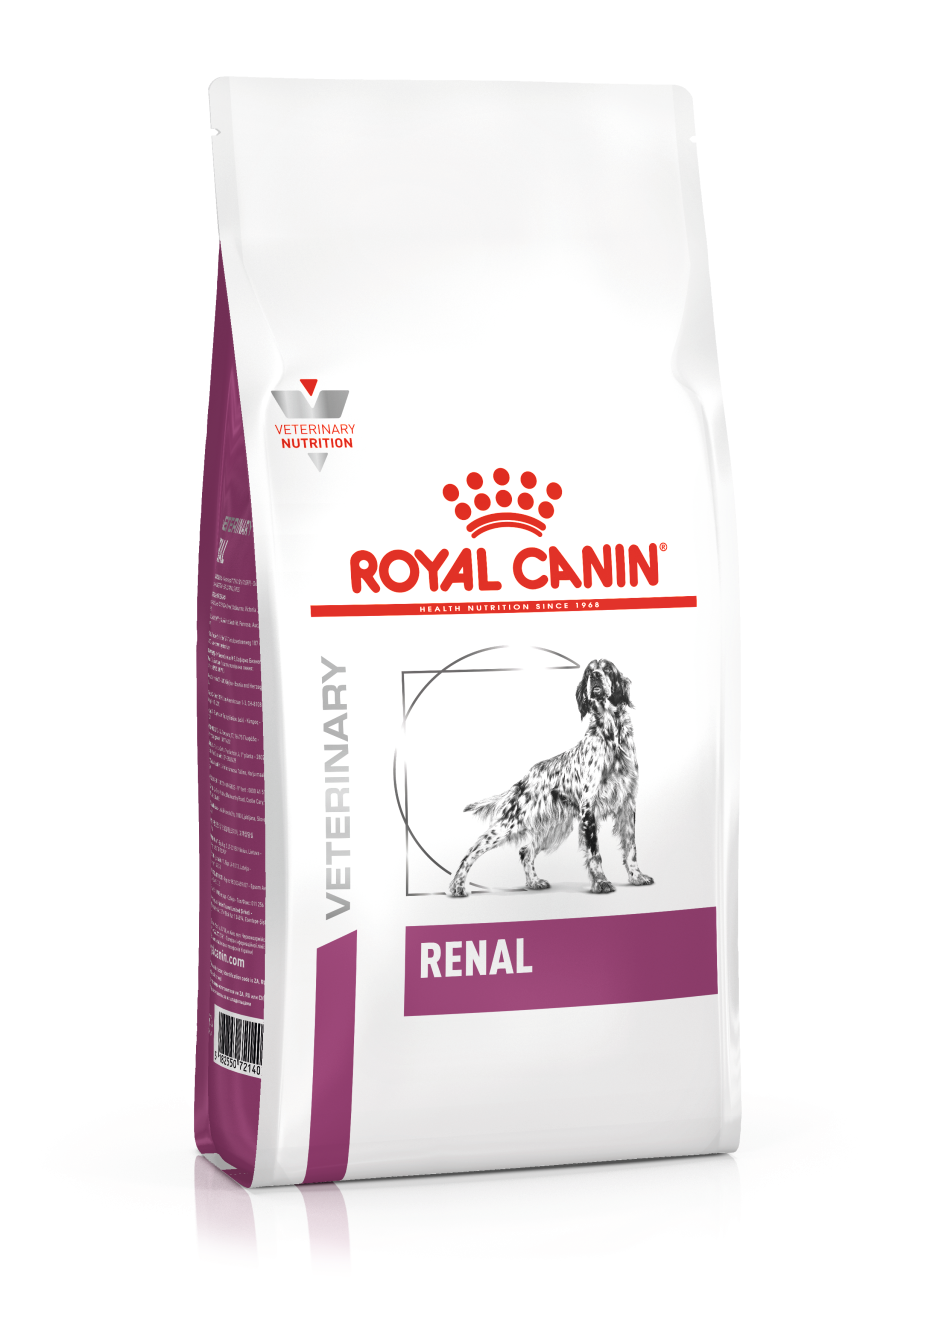 Royal Canin Renal  hond  __ 1x 14 kg